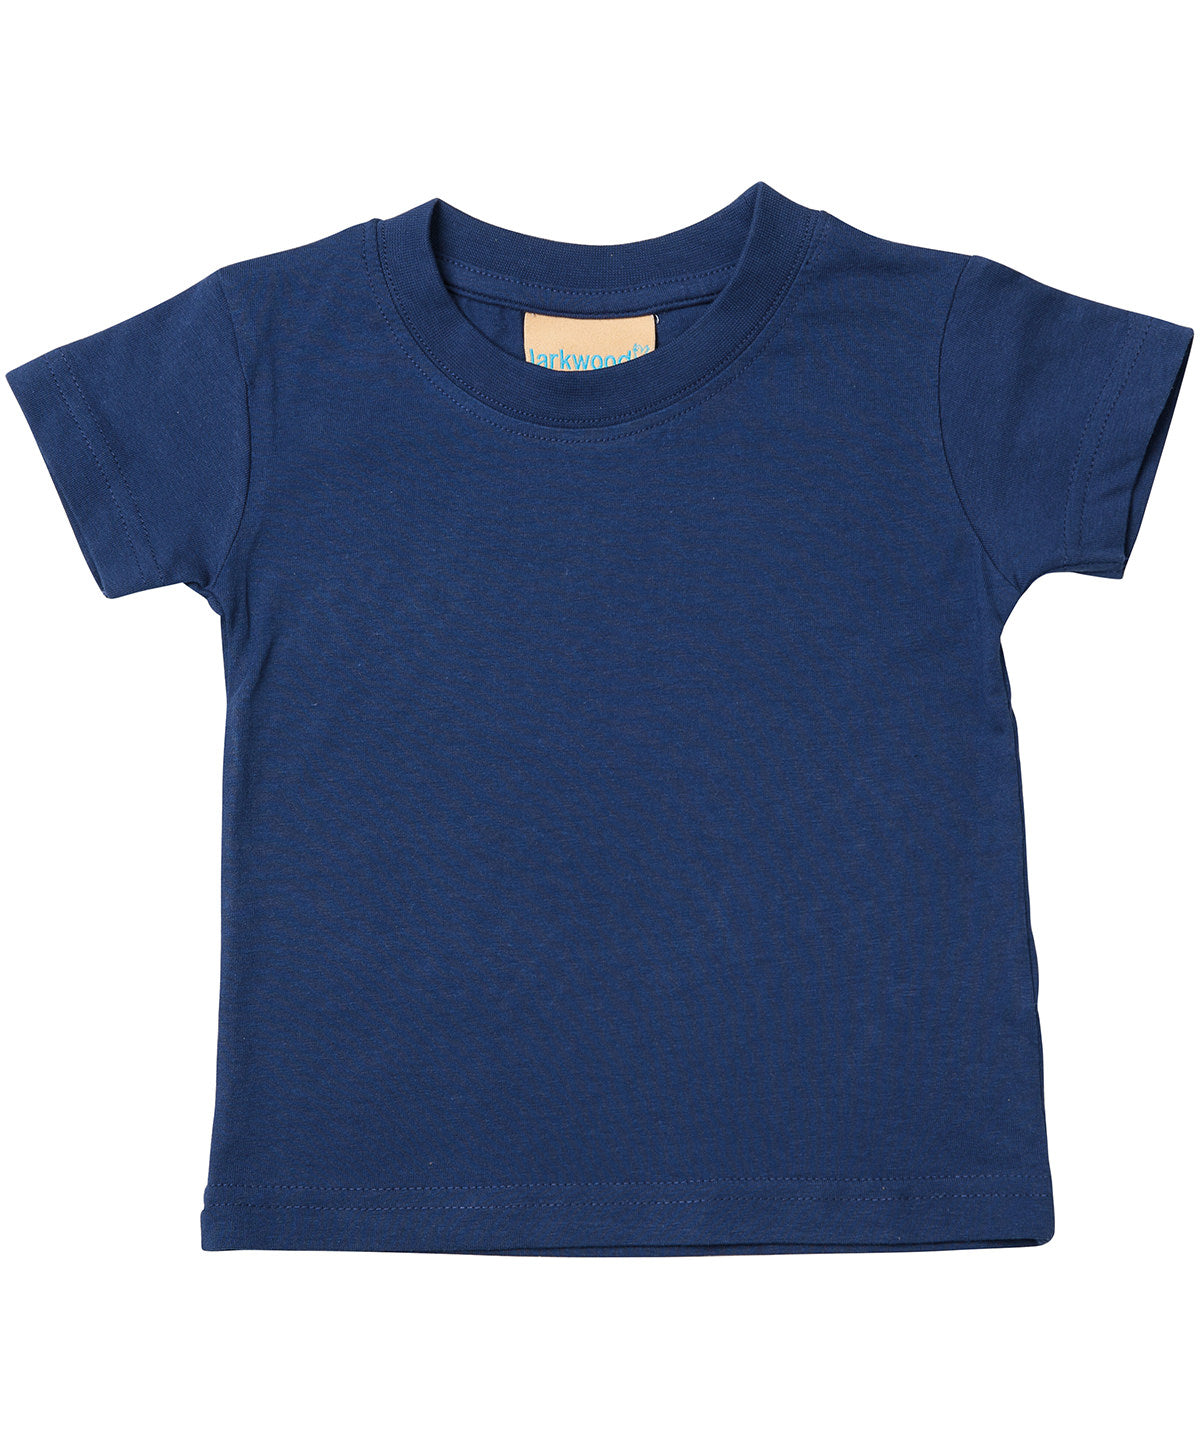 Larkwood Baby/toddler t-shirt Navy